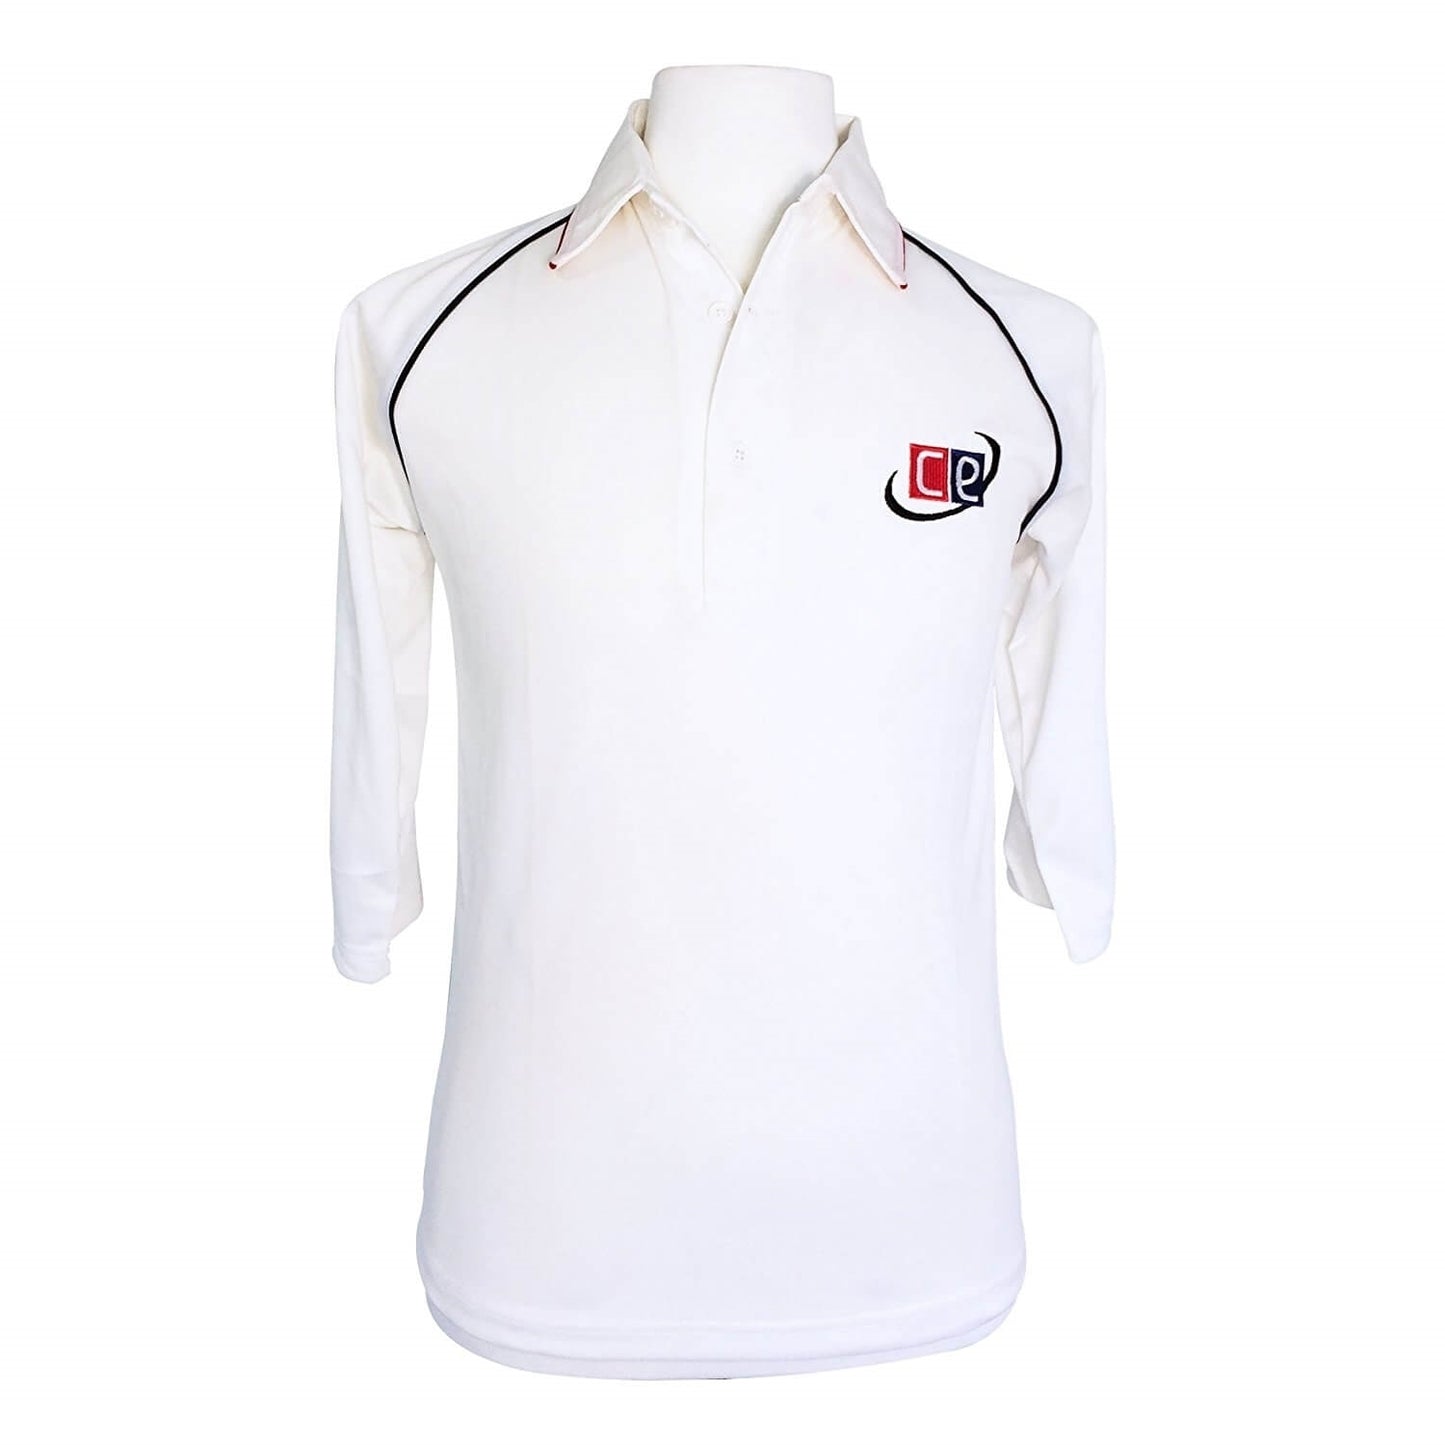 Cricket Whites Shirts 3/4 Long Sleeves Cricket Jersey